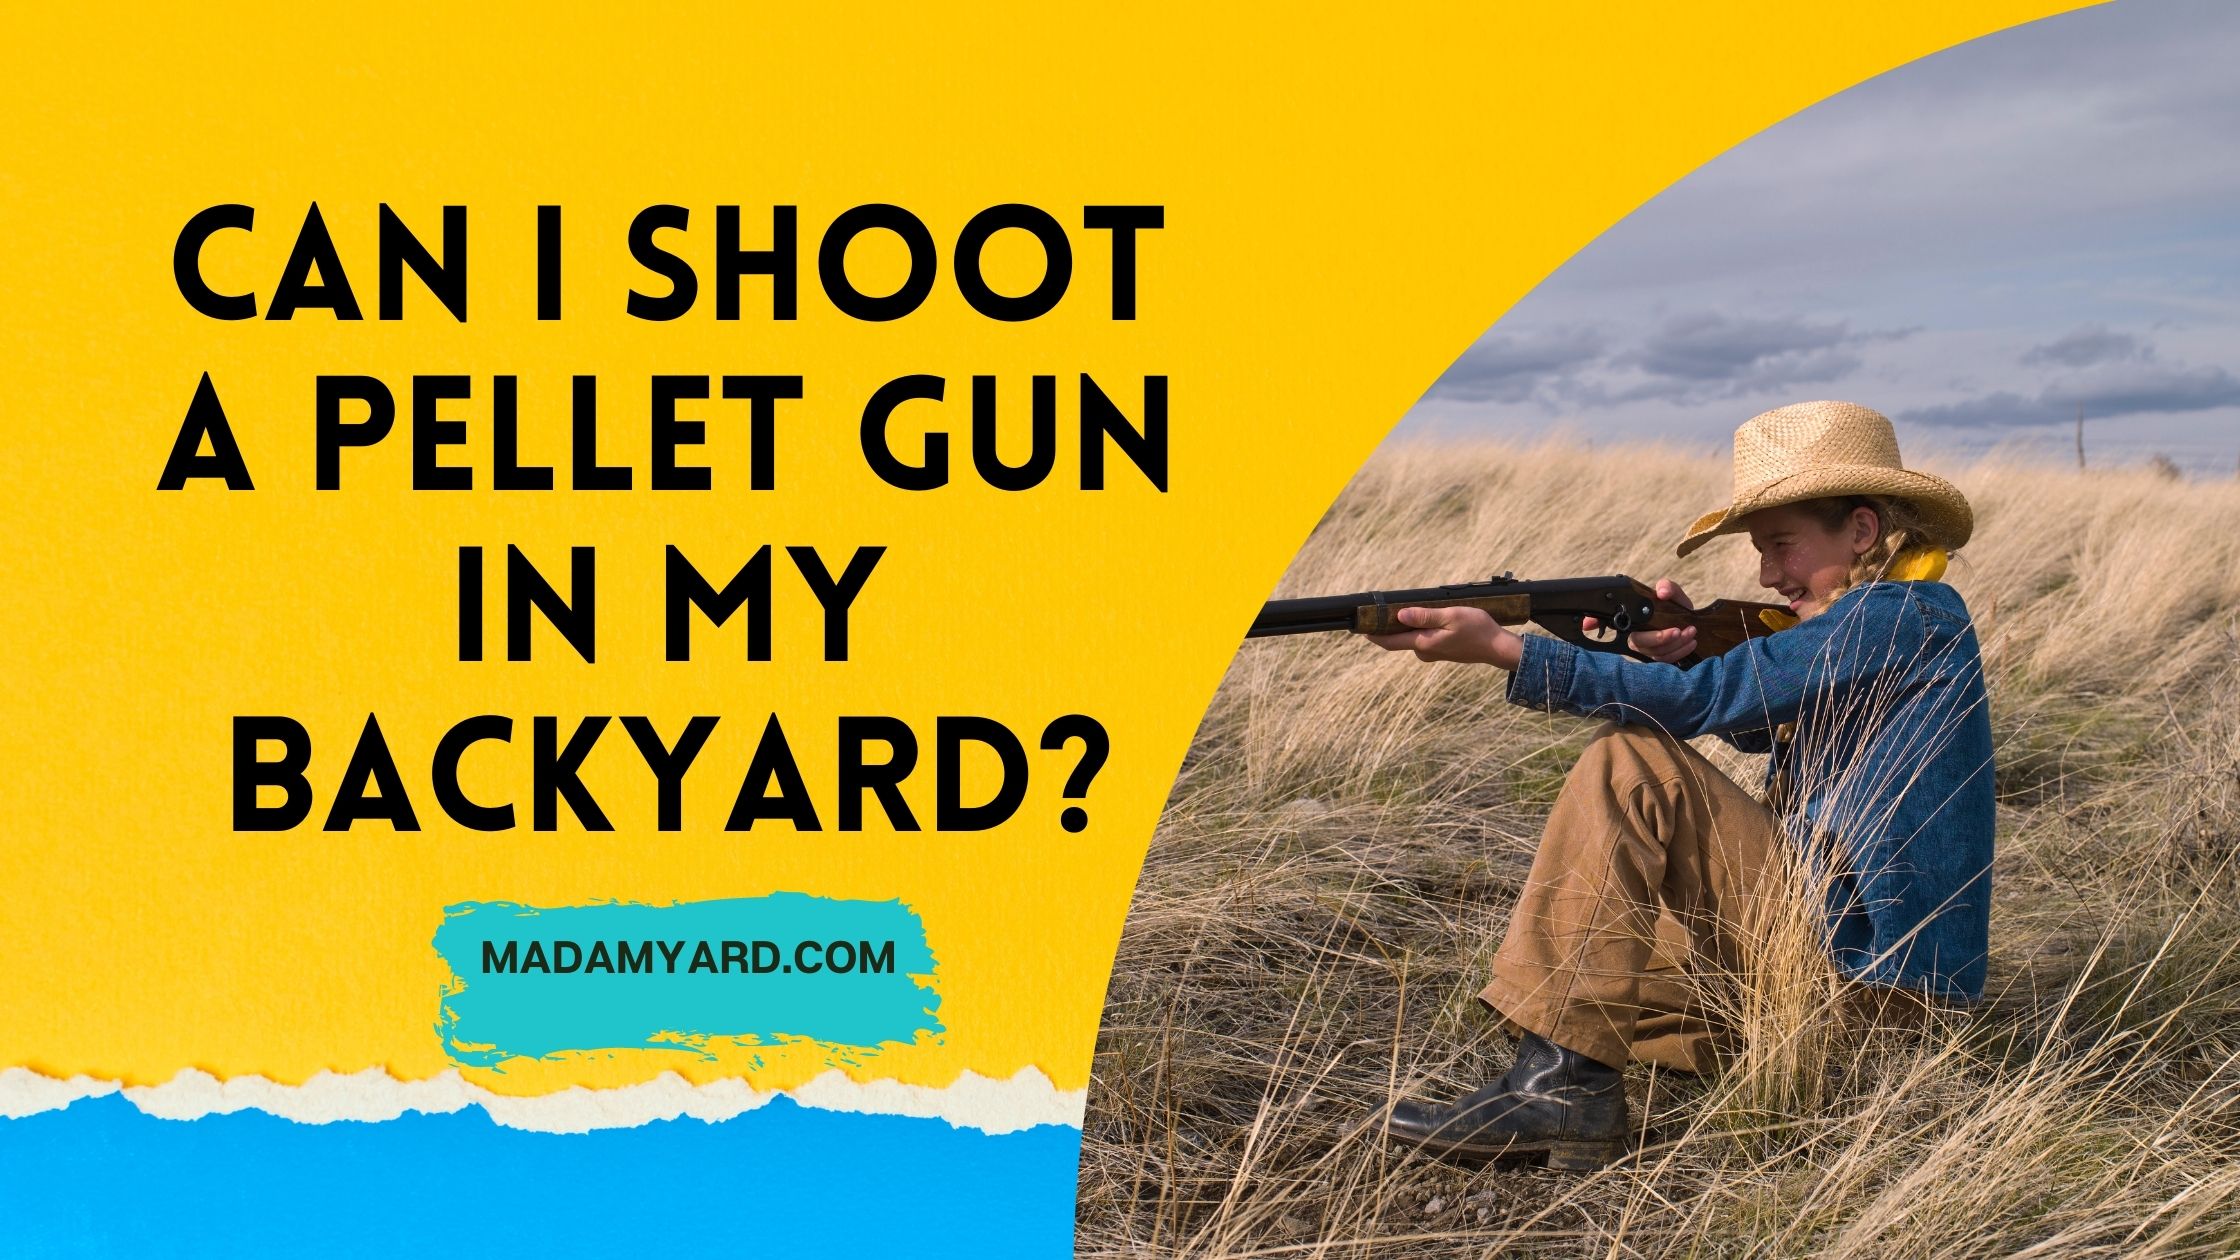 Can I Shoot A Pellet Gun In My Backyard? - Can I Shoot A Pellet Gun In My BackyarD